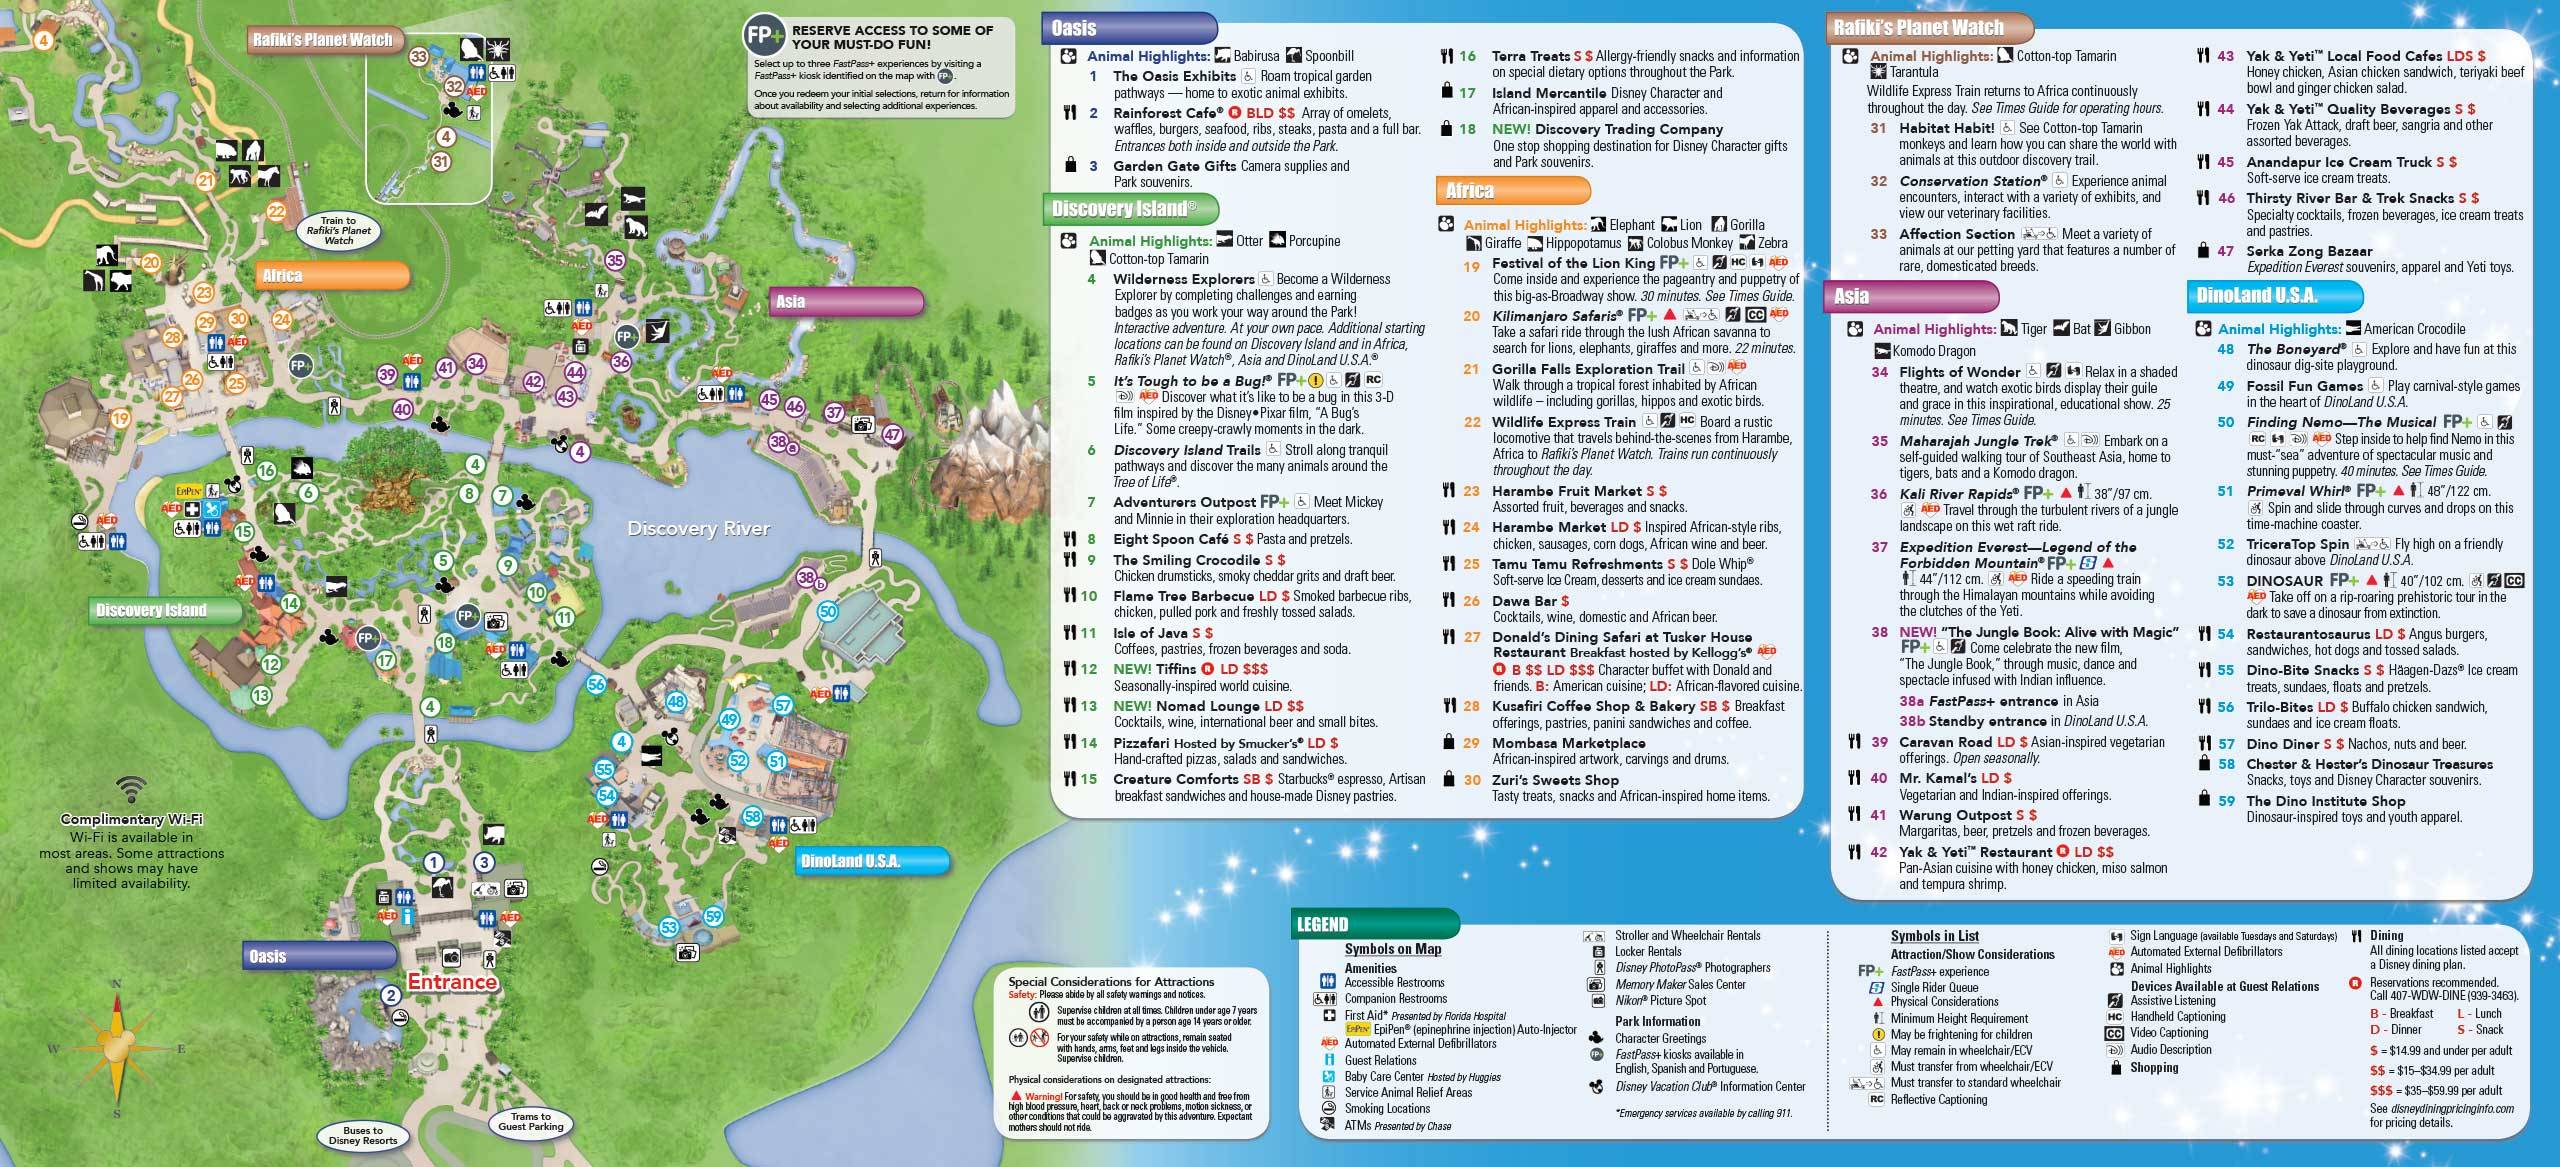 Disney's Animal Kingdom Guide Map May 2016 - Back